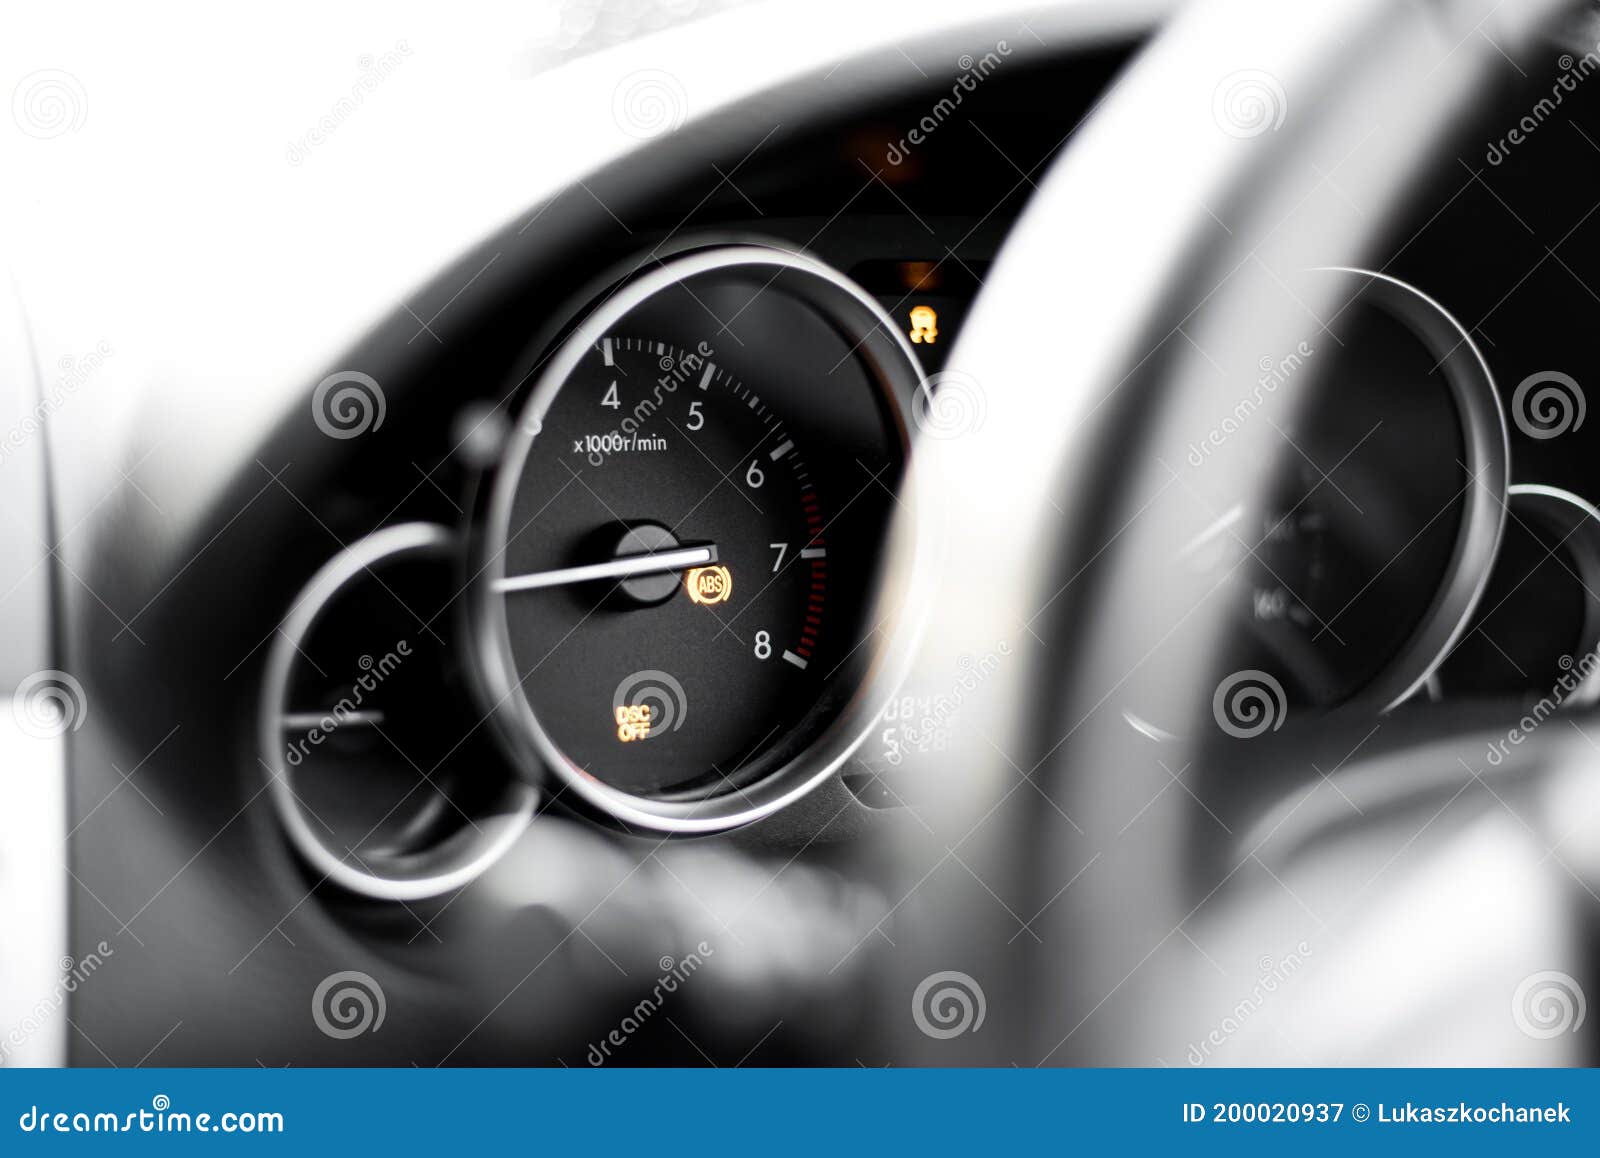 vehicle dashboard - car breakdown - traction control light on - dsc light on - esp light on - abs light on